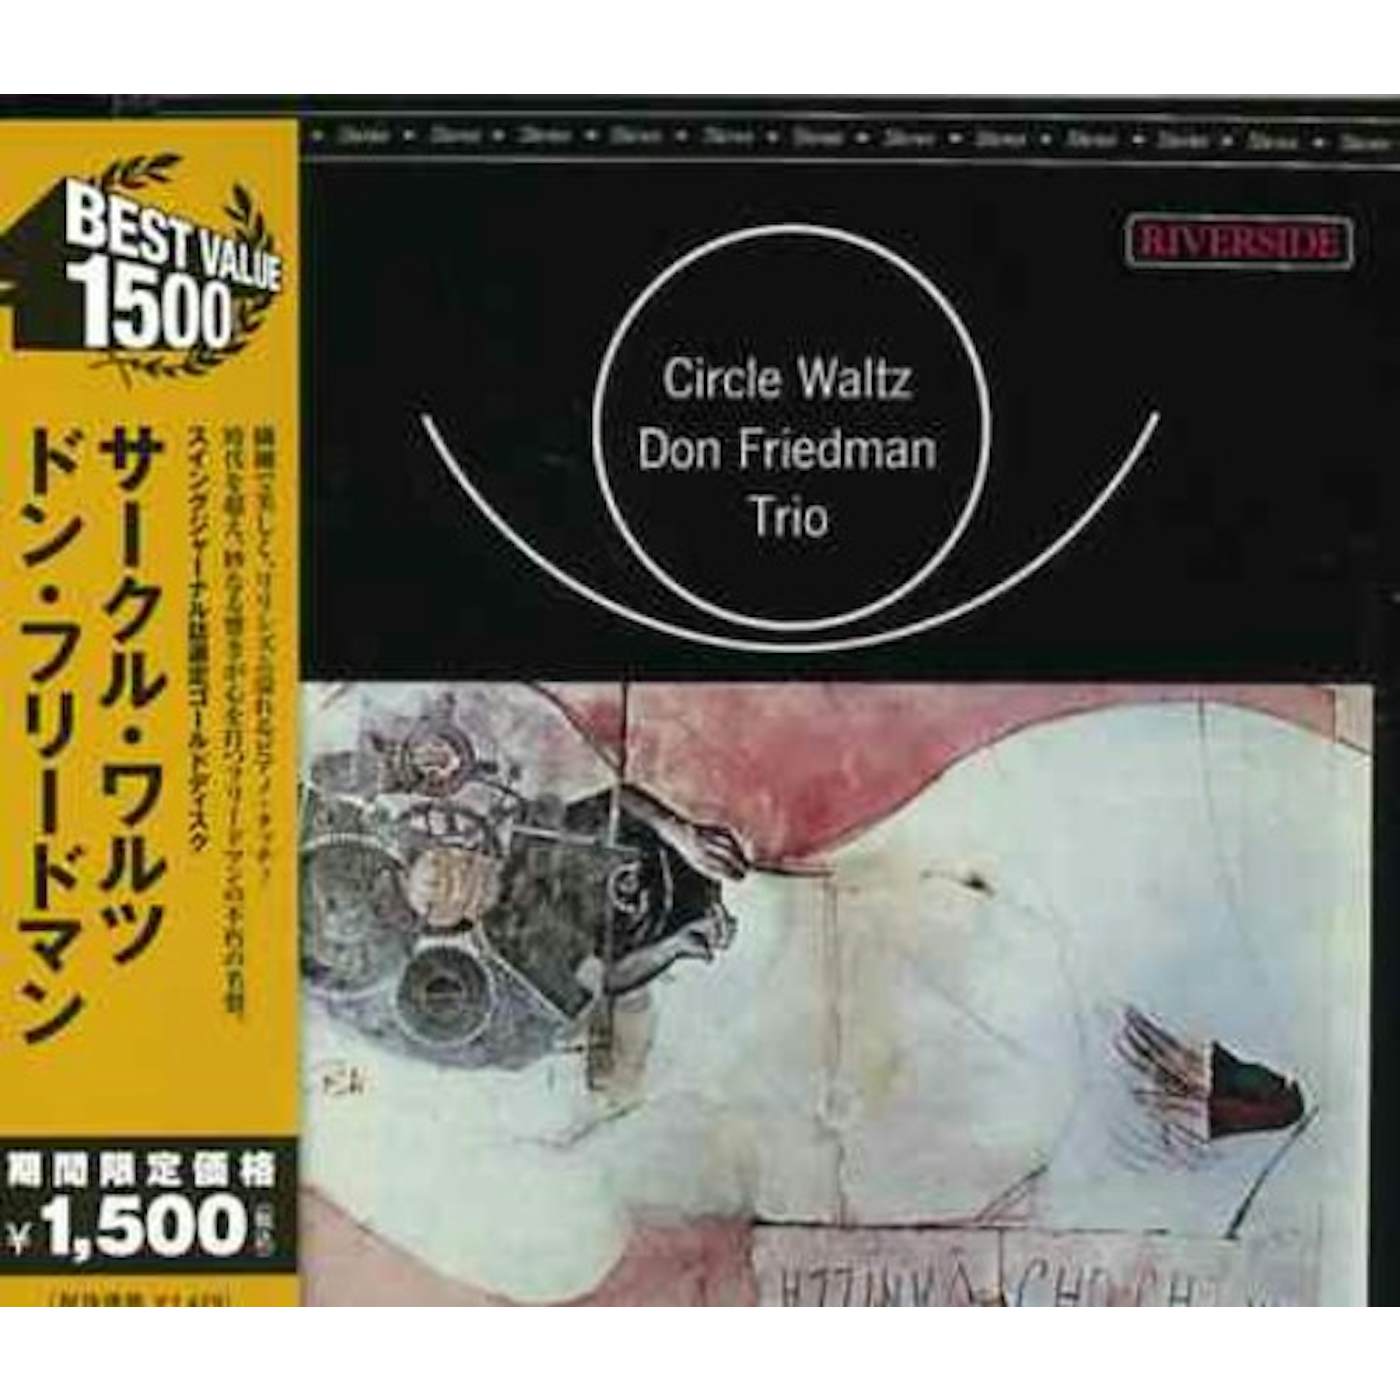 Don Friedman CIRCWALTZ CD